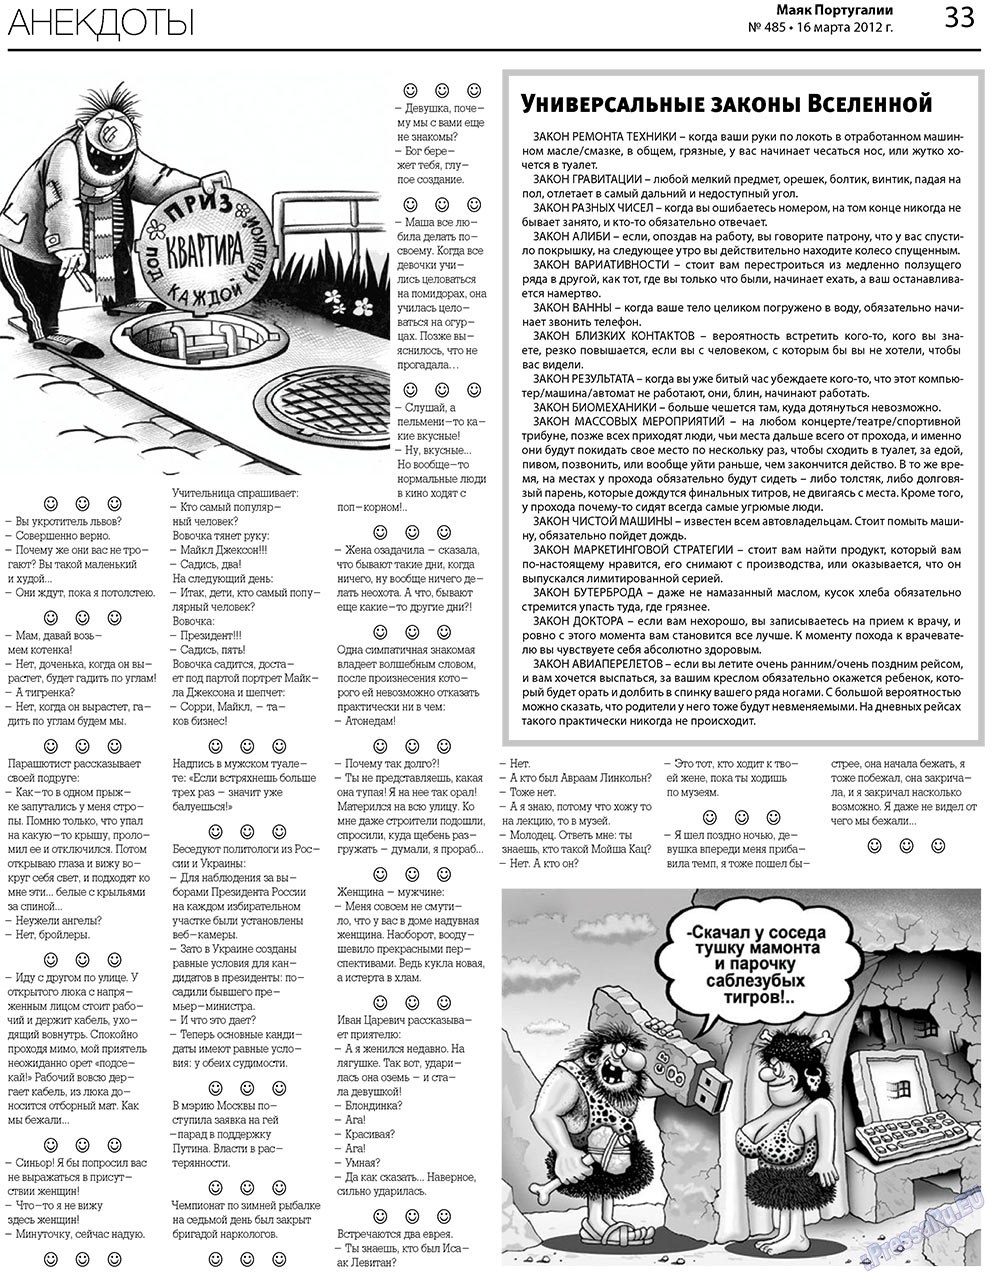 Маяк Португалии, газета. 2012 №485 стр.33